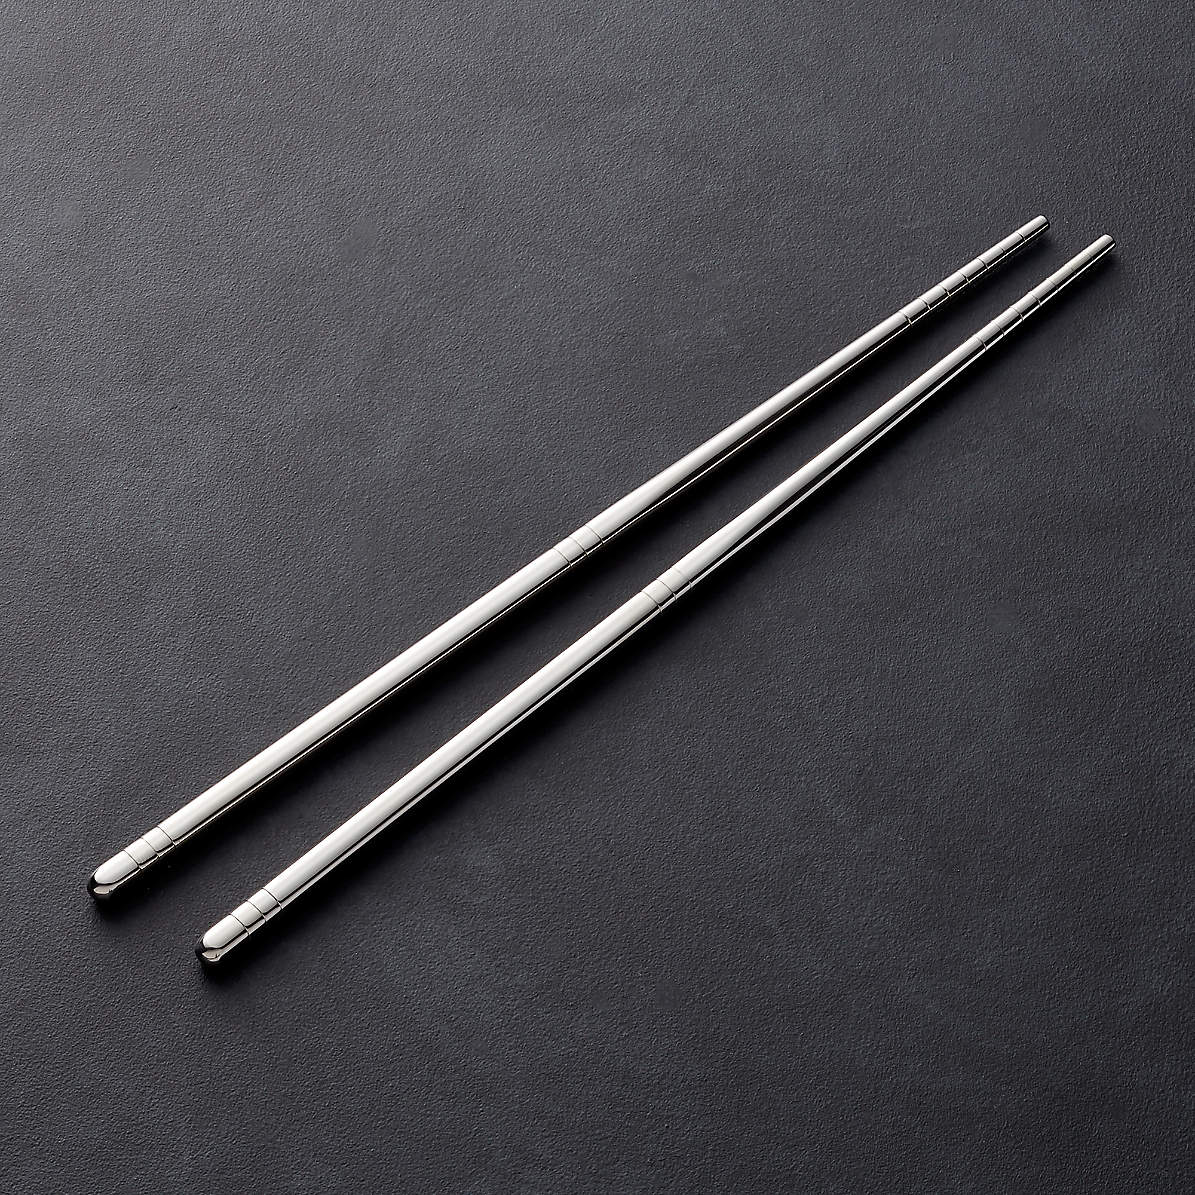 Stainless Steel Chopsticks + Reviews 